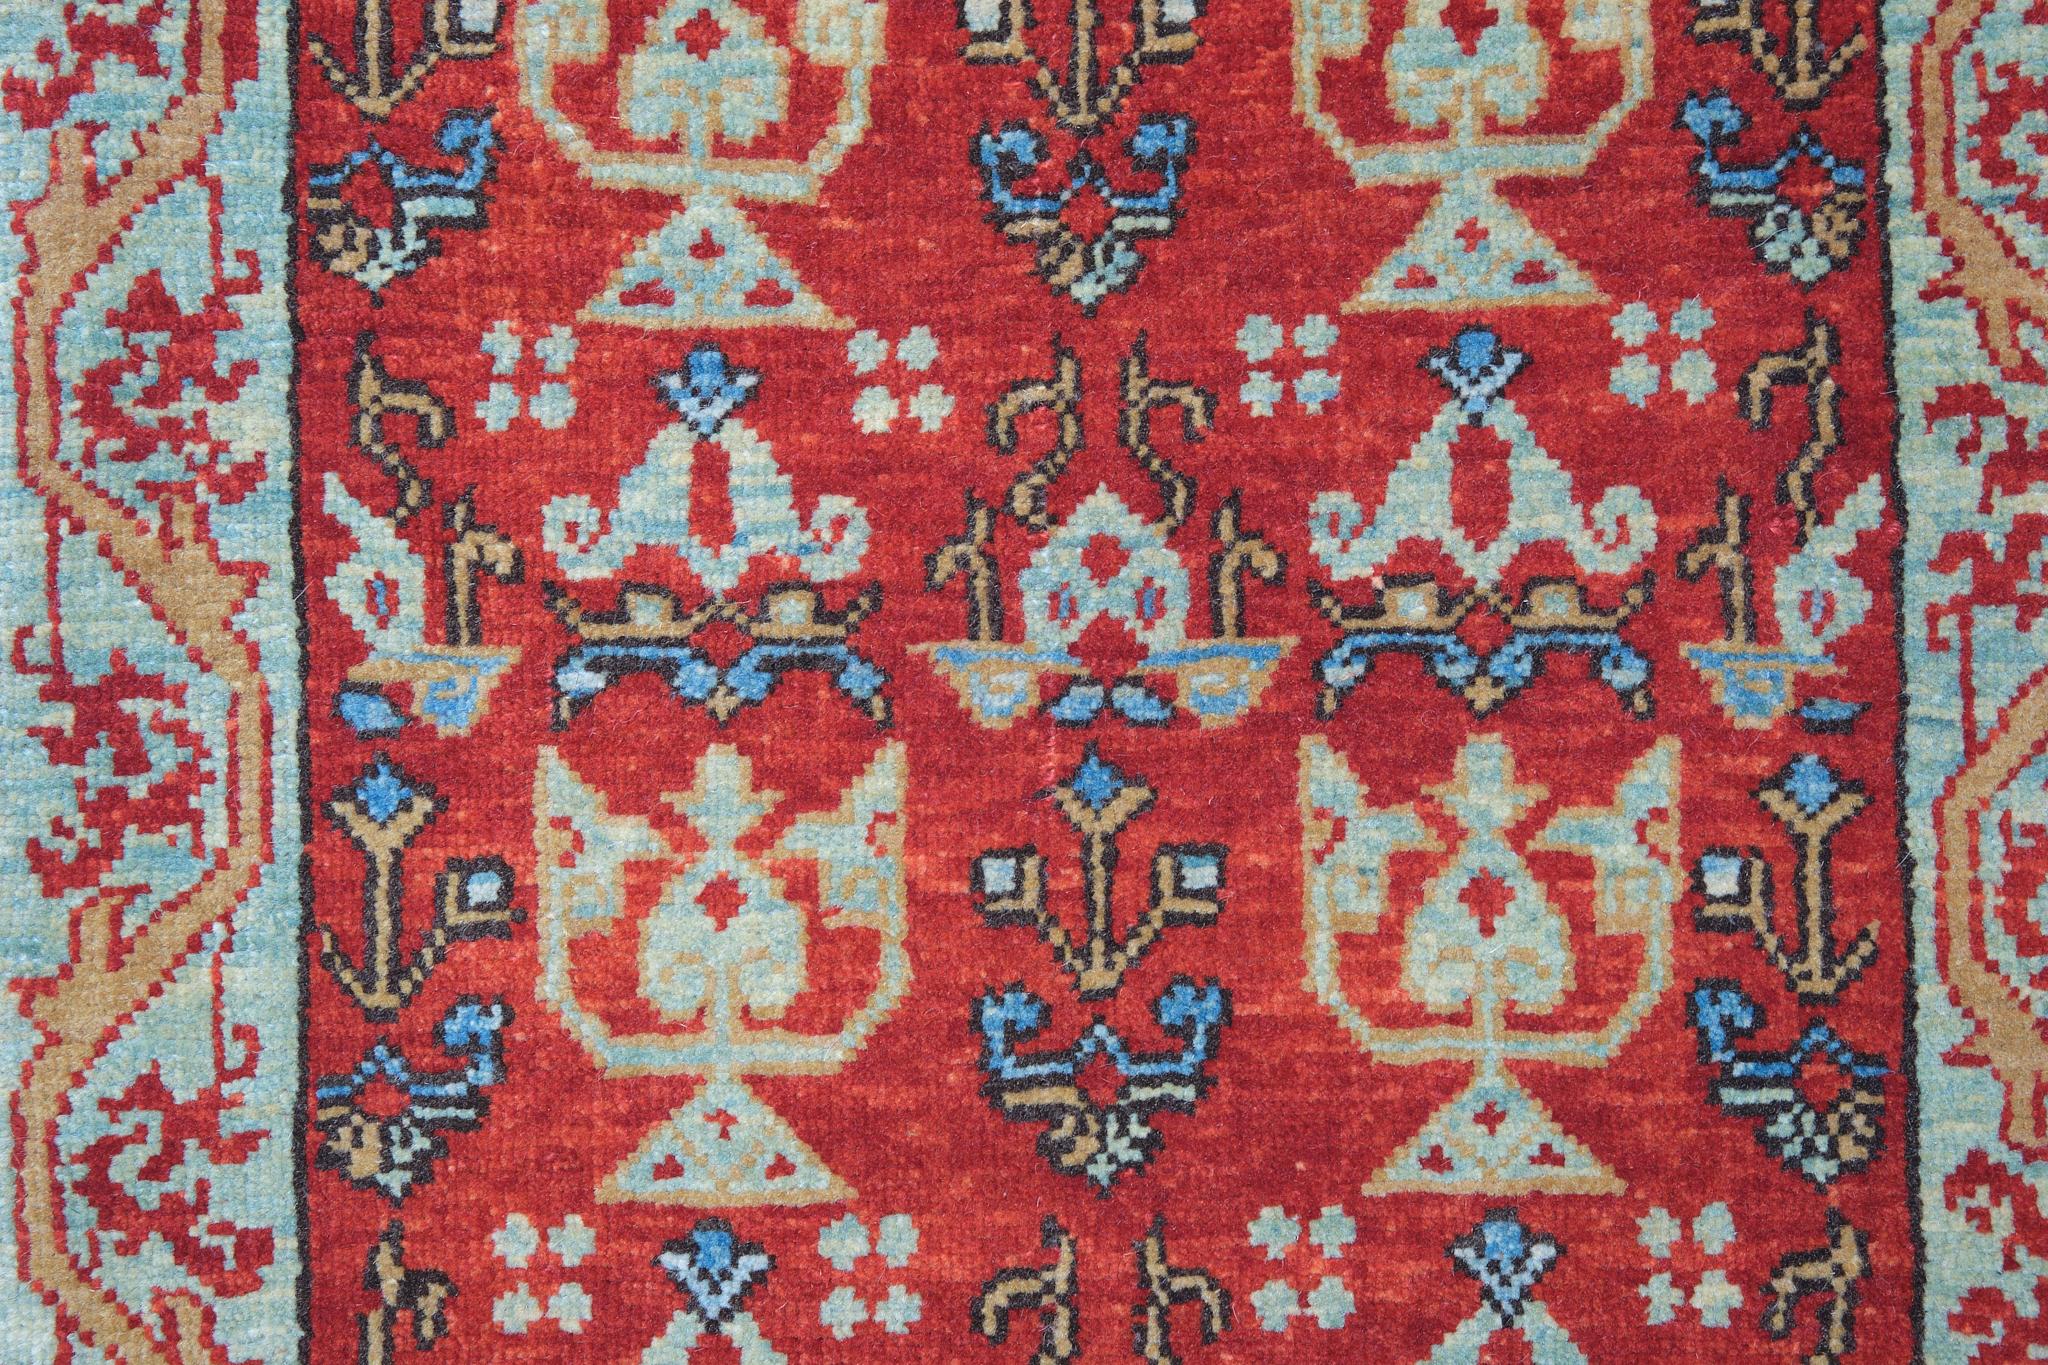 Turkish Ararat Rugs Mamluk Wagireh Rug with Candelabra Elems Revival Carpet Natural Dyed For Sale